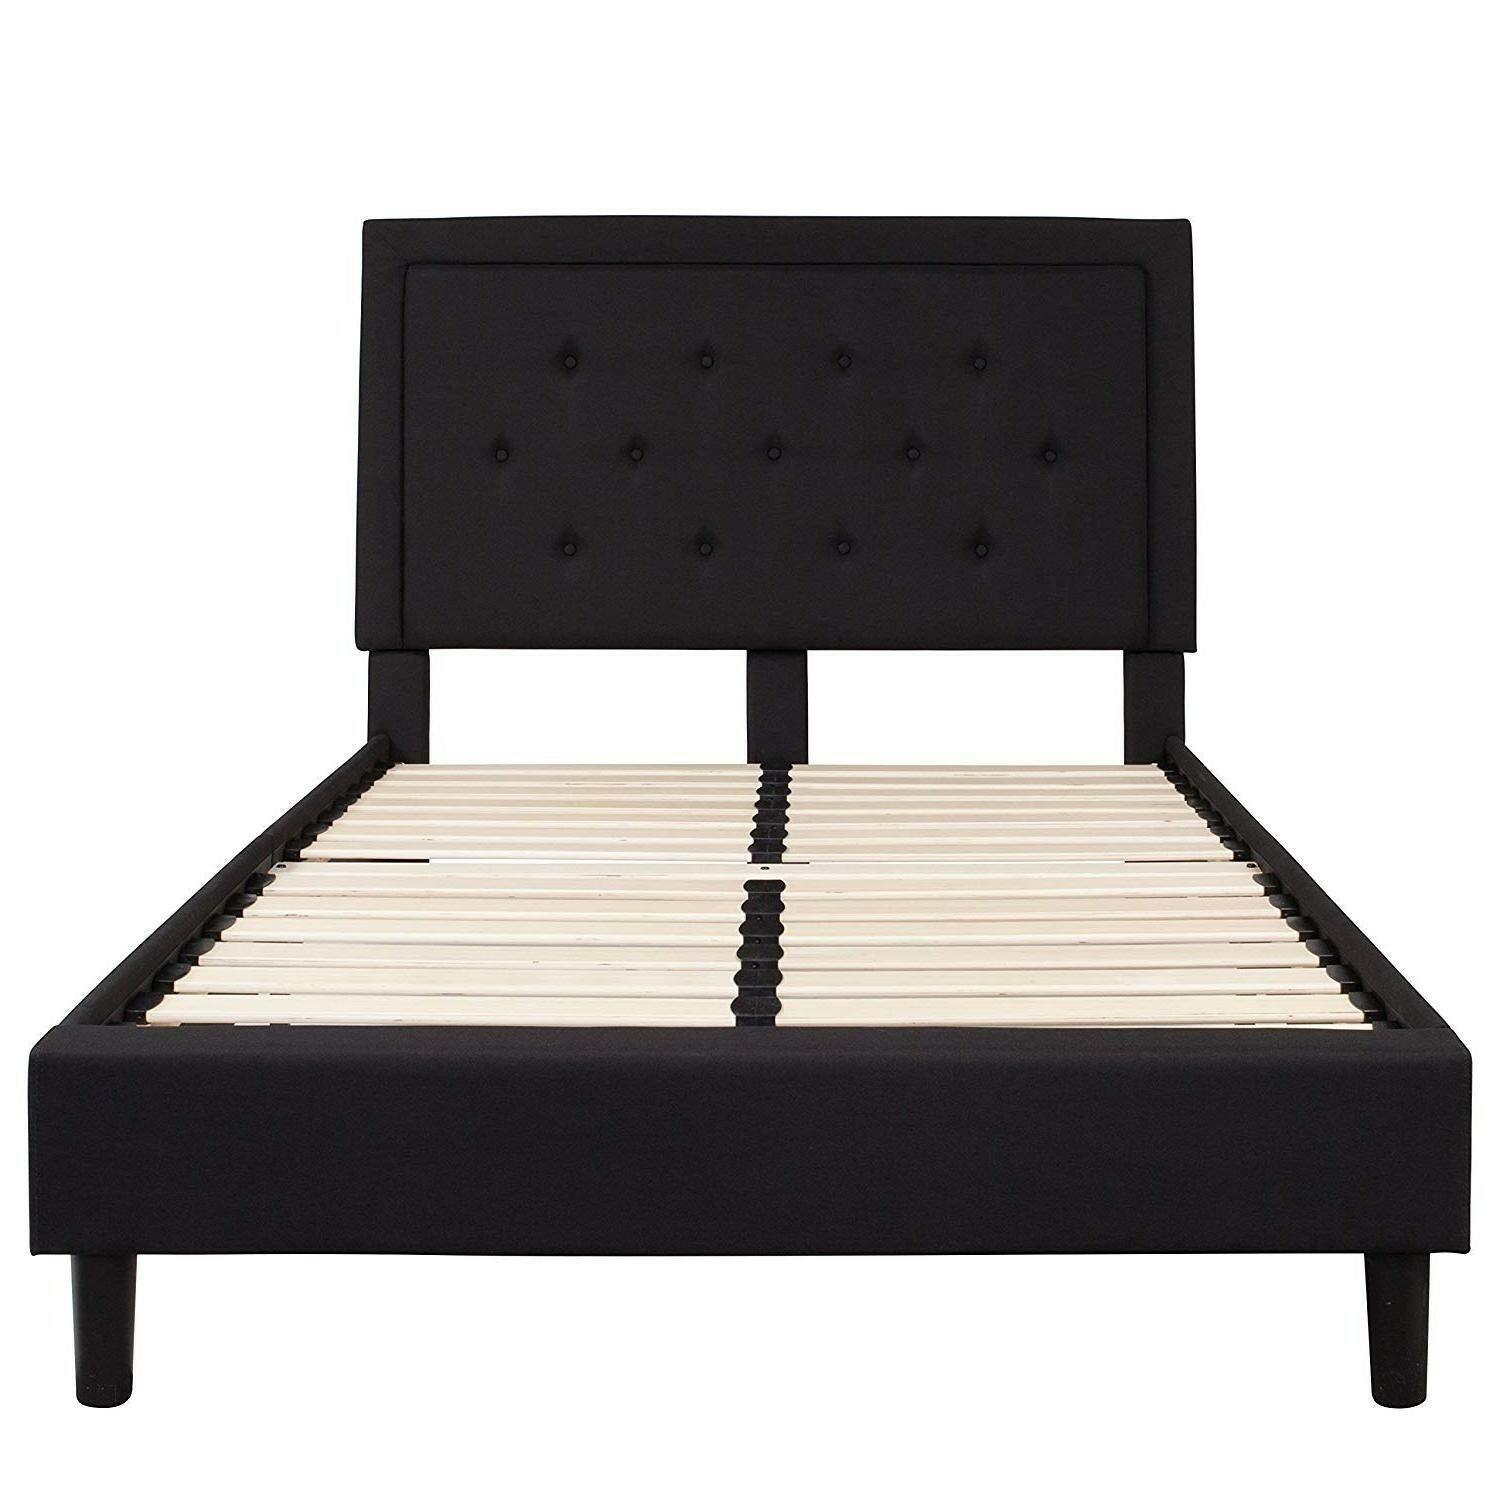 Full size Black Fabric Upholstered Platform Bed Frame with Headboard - FurniFindUSA